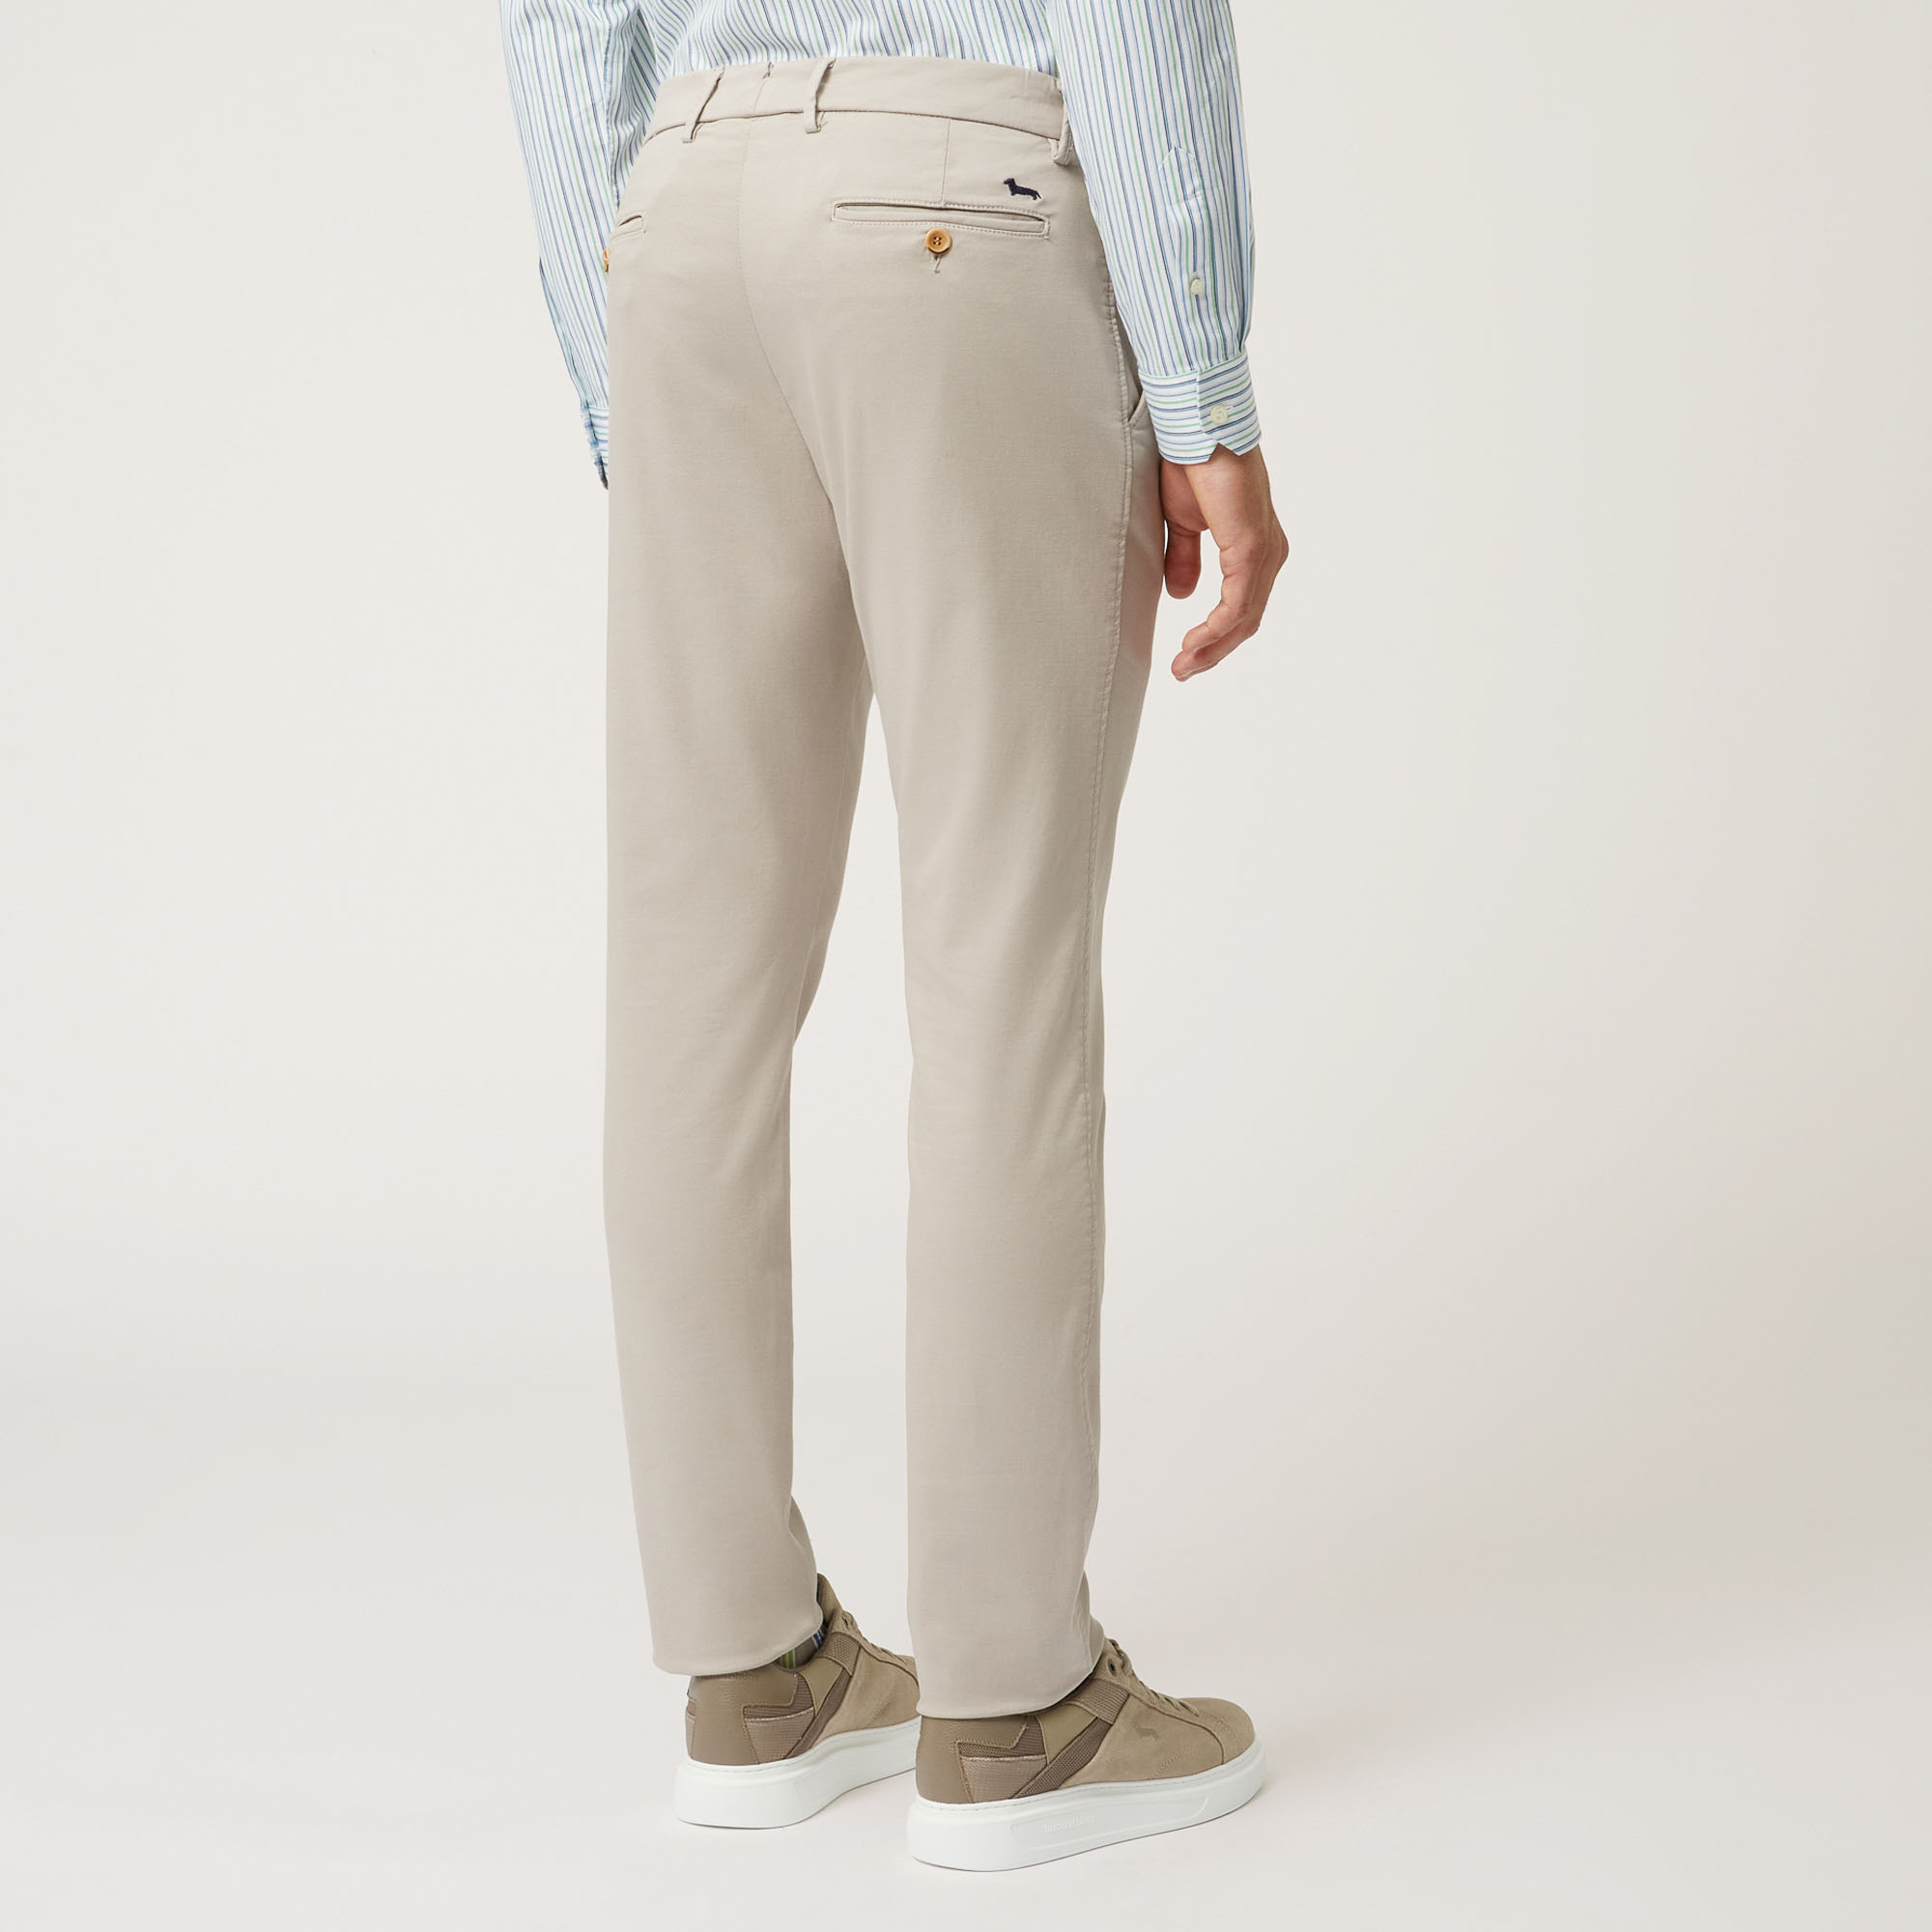 Pantalone Chino Narrow Fit In Tessuto Coolmax, Beige, large